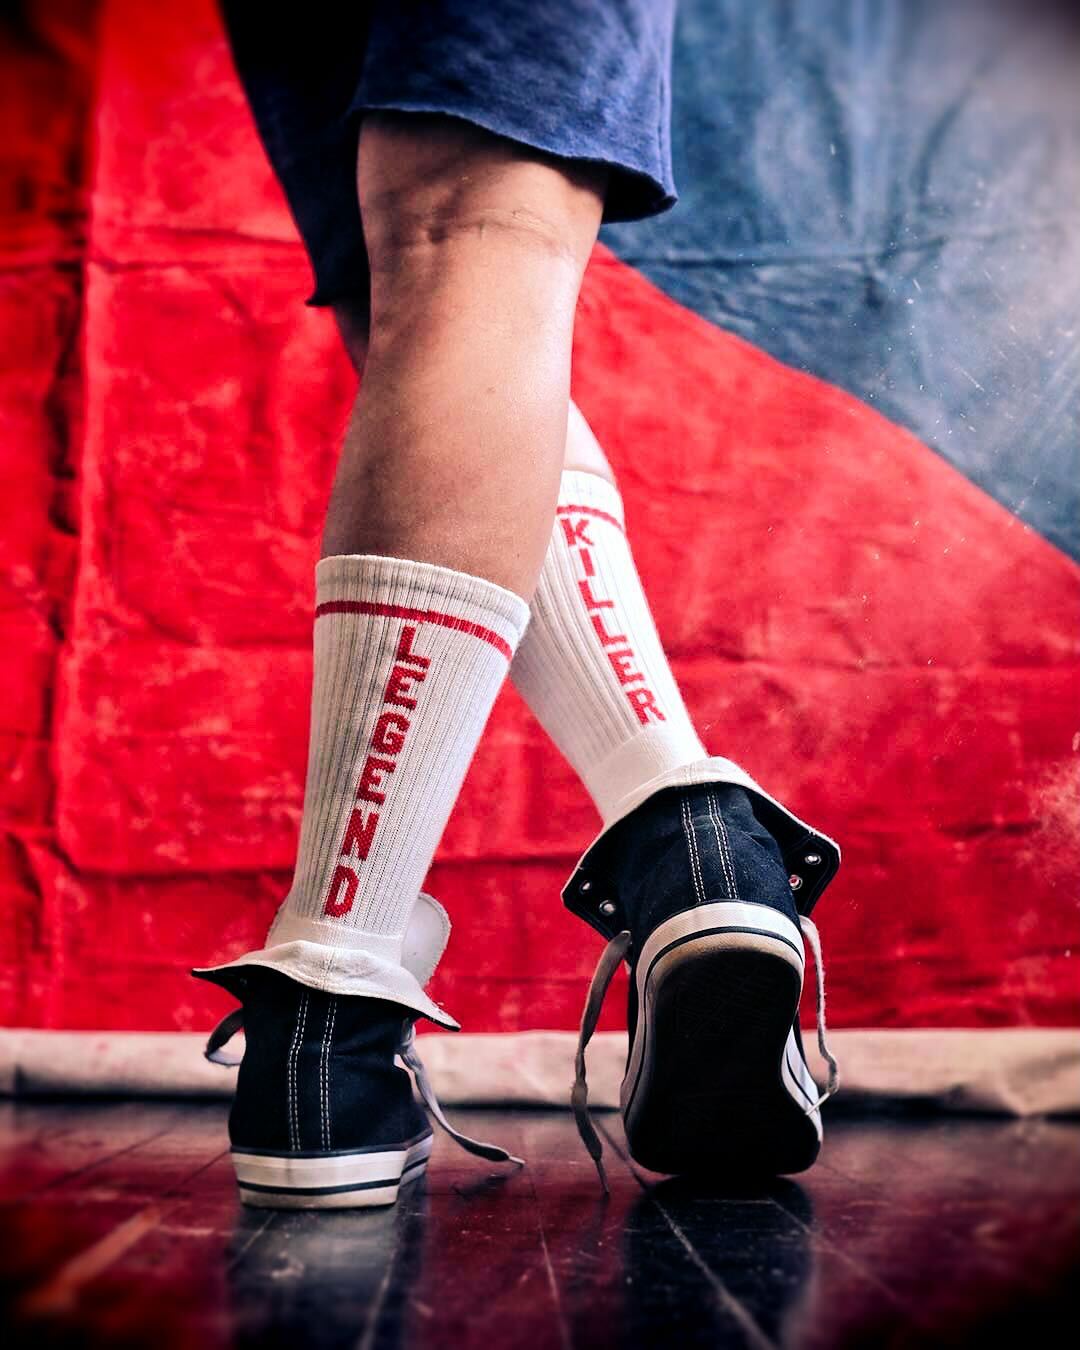 Rowdy Roddy Piper Legend Killer Socks - Roots of Fight Canada